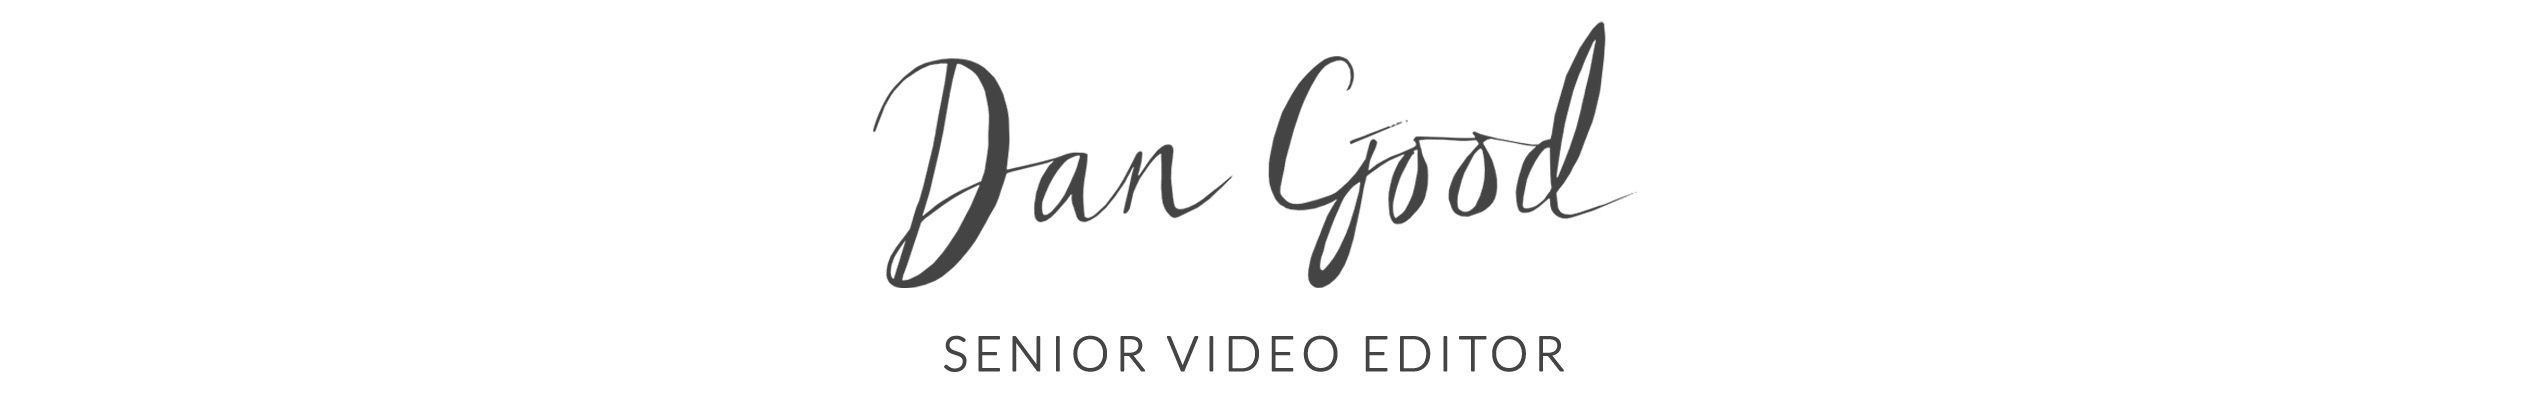 Dan Good Senior Video Editor